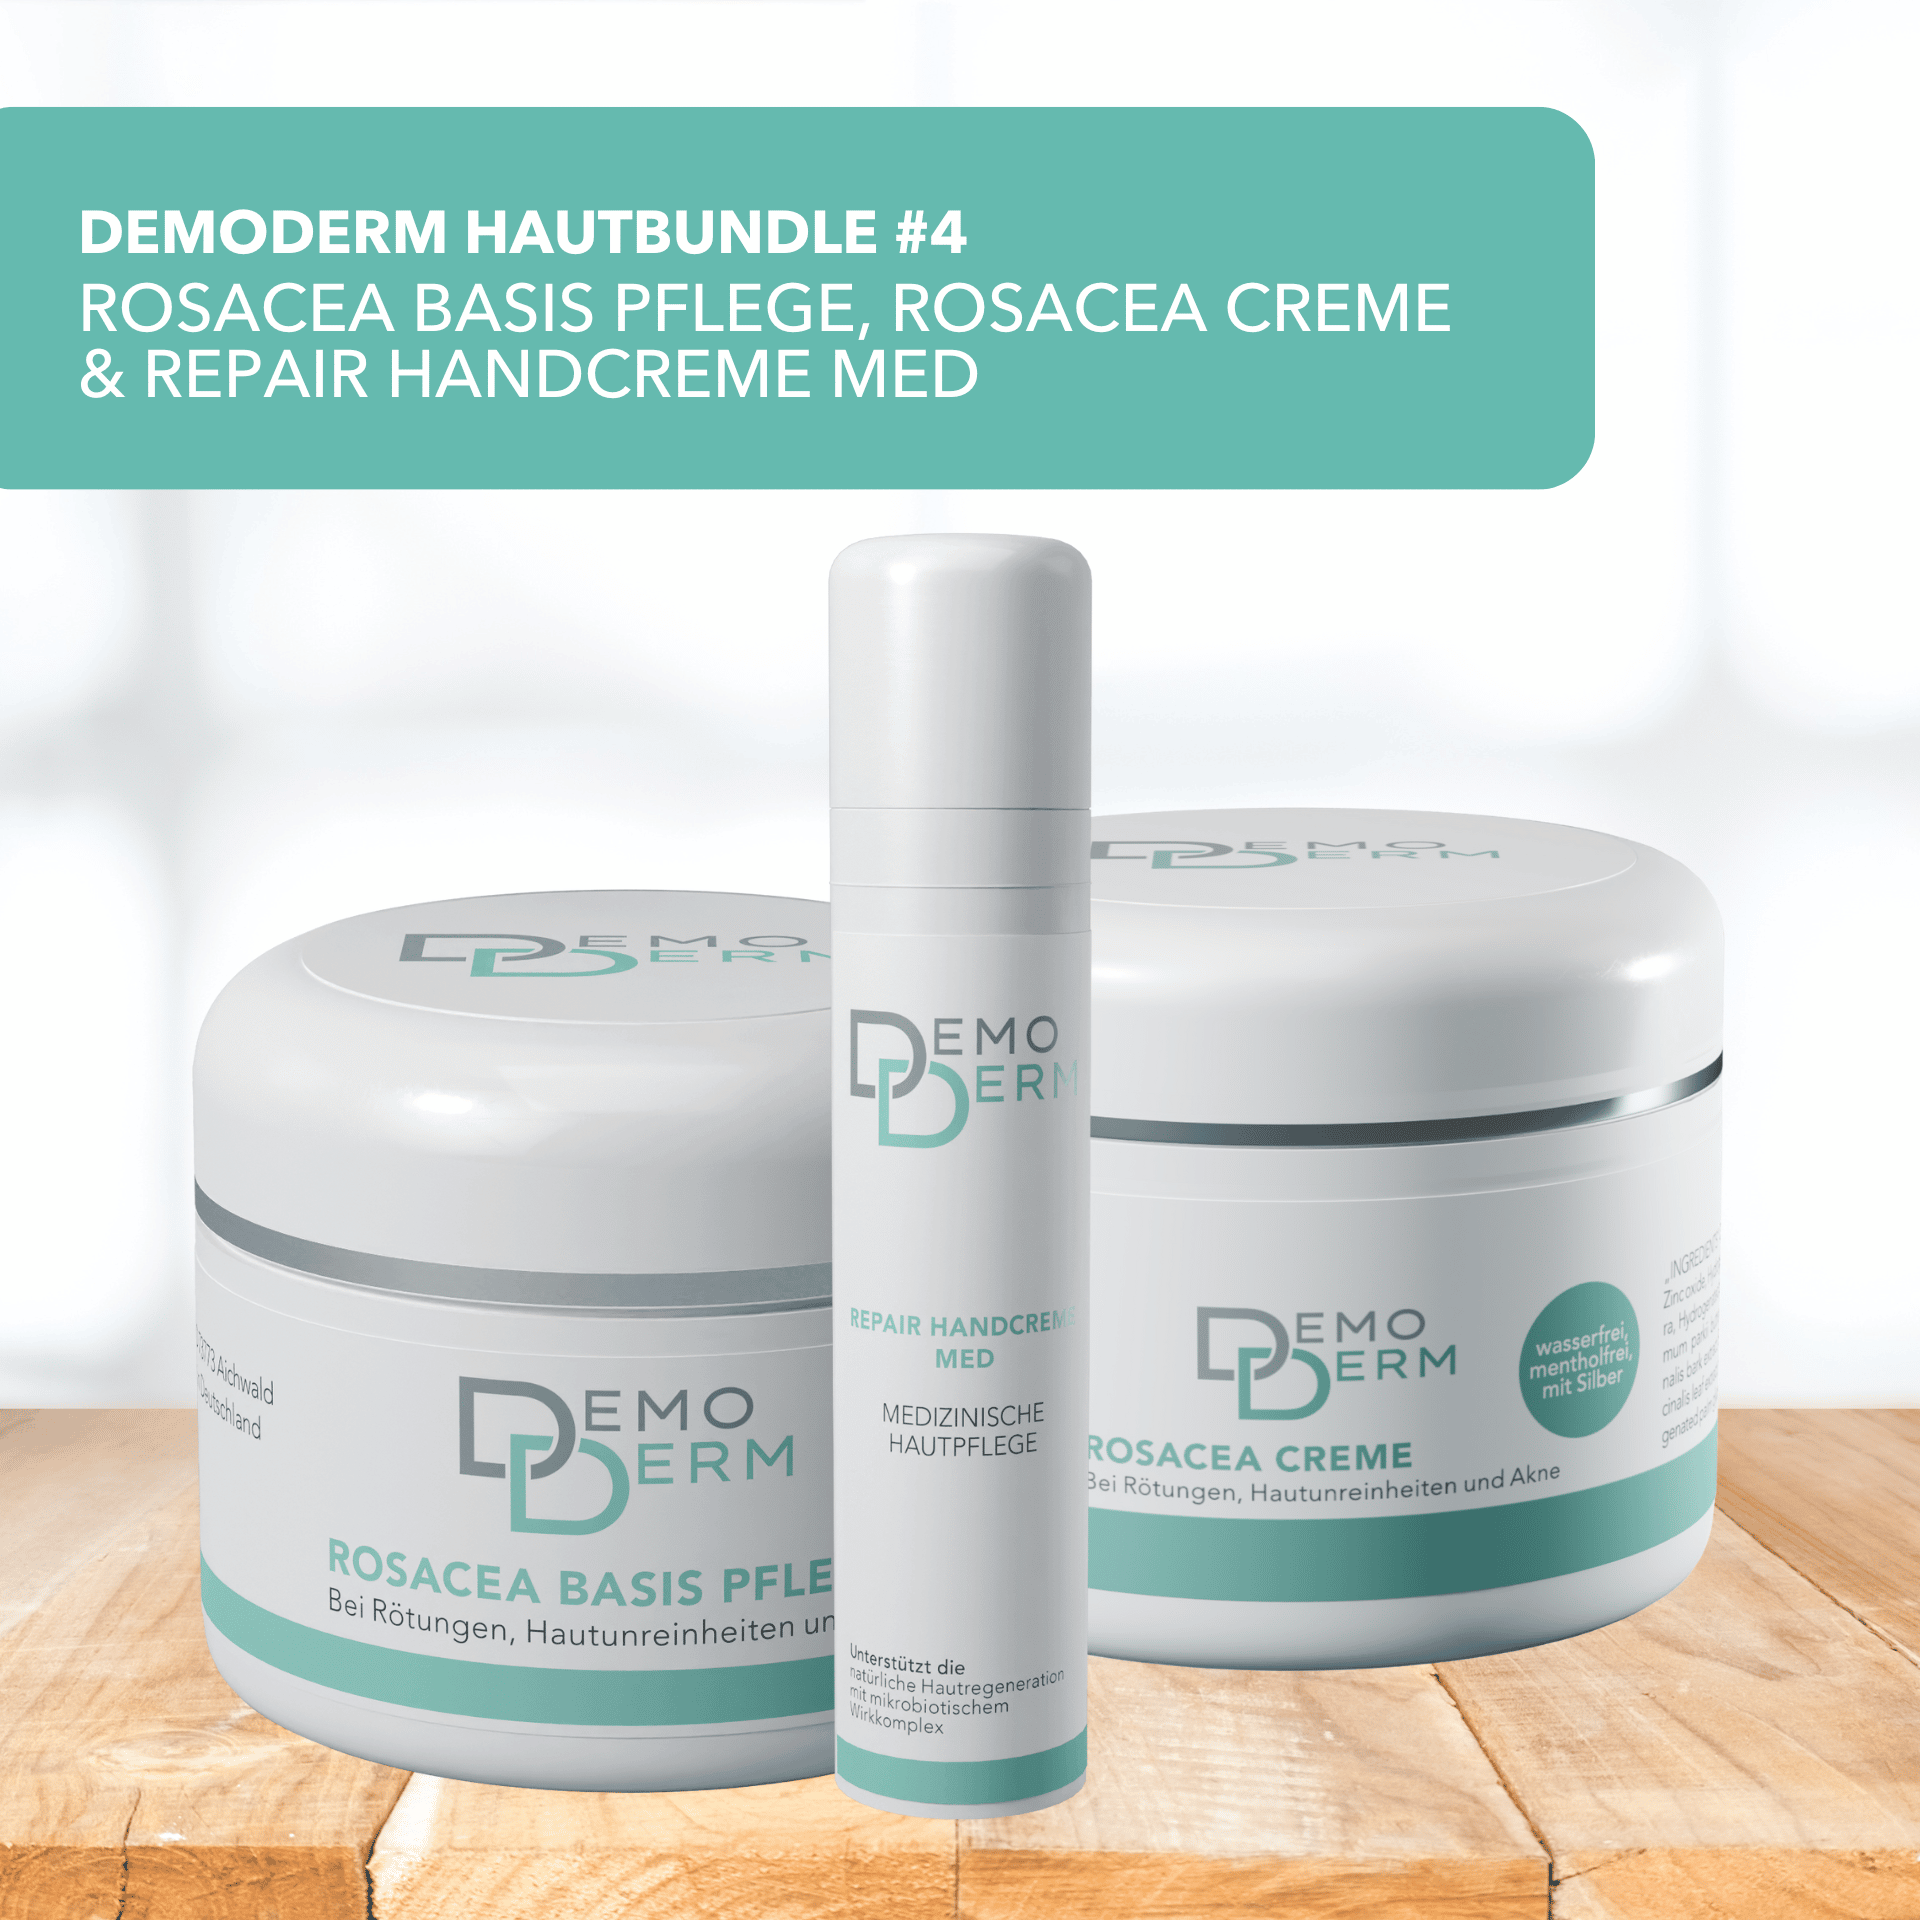 DemoDerm Hautbundle #4 - Rosacea Basis Pflege, Rosacea Creme & Repair Handcreme Med